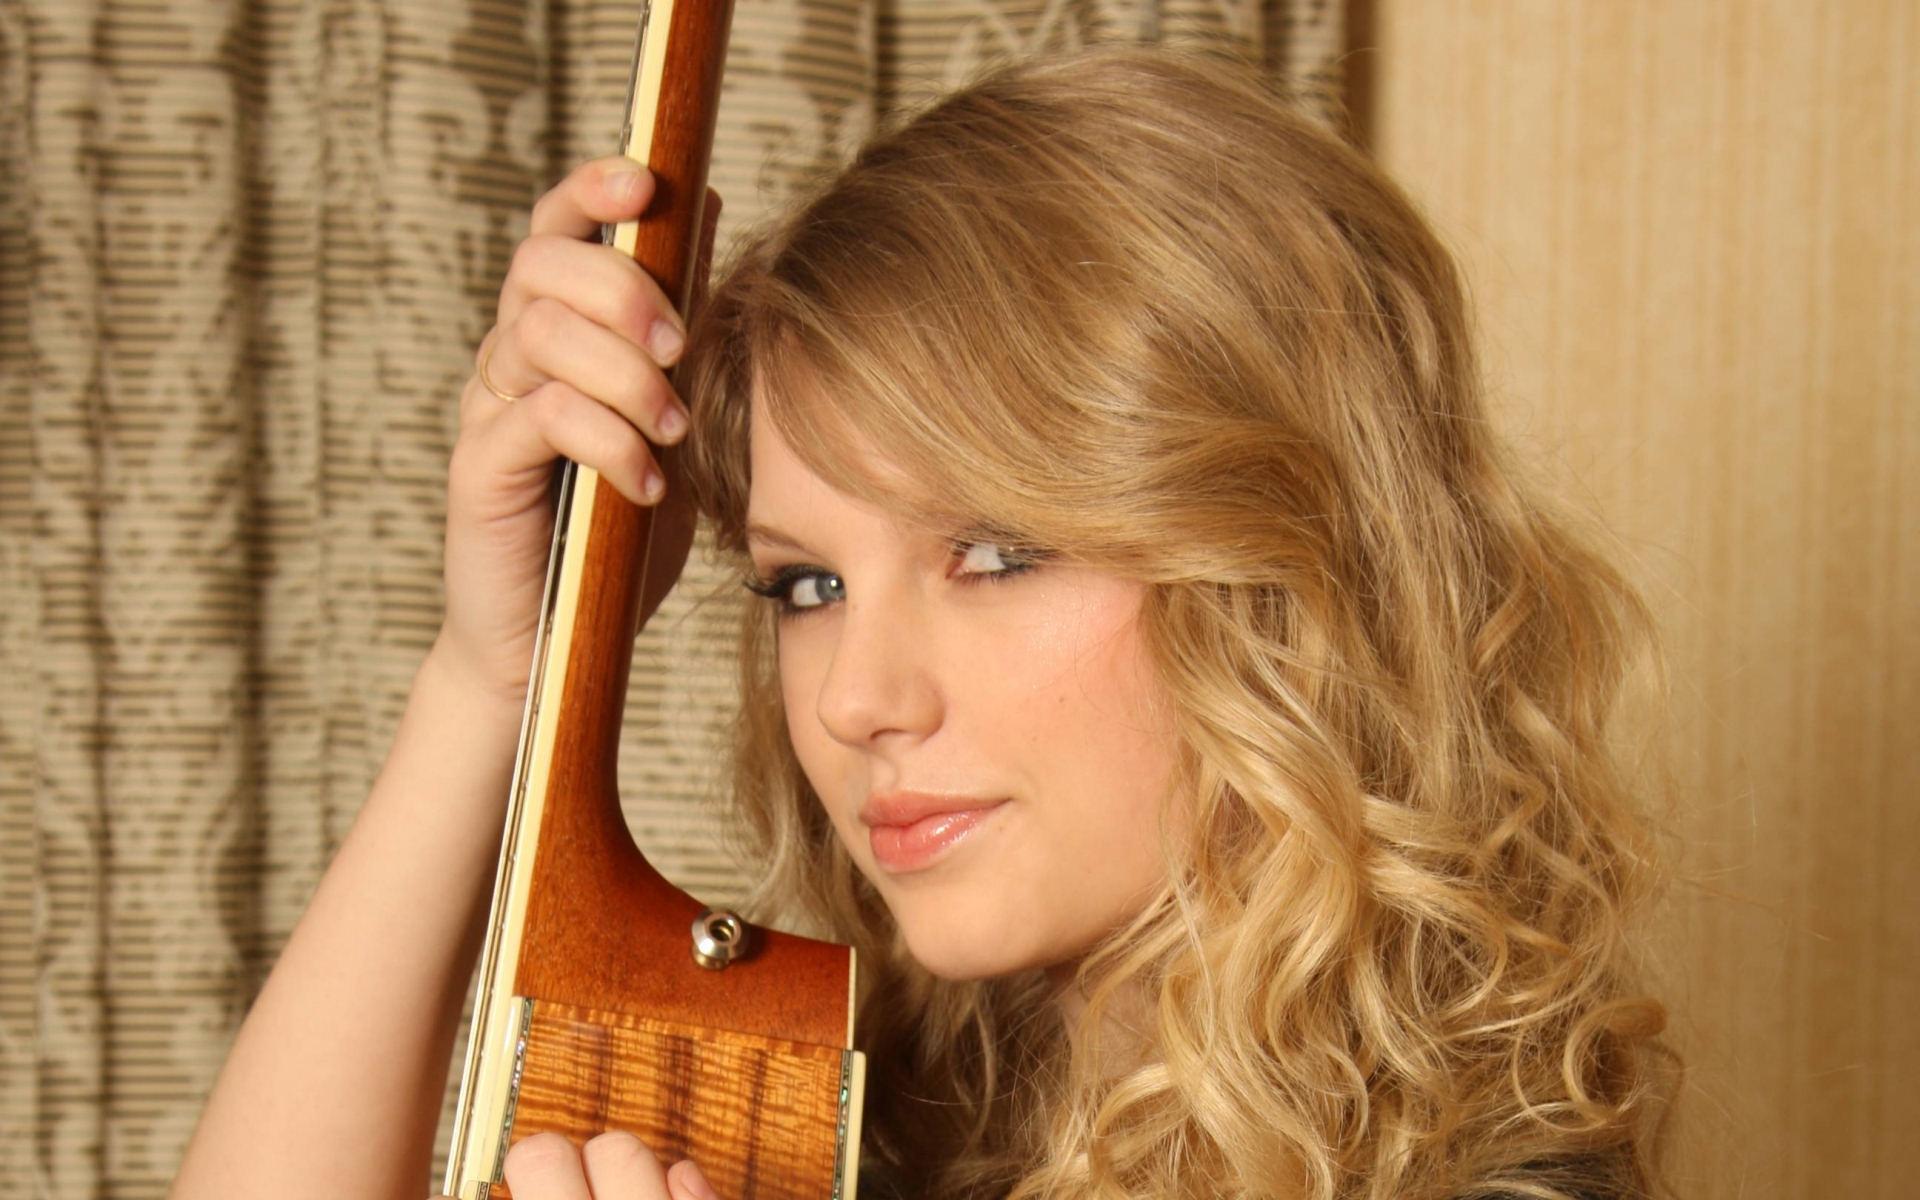 Taylor Swift Photohoot Wallpaper. Free Download Wallpaper